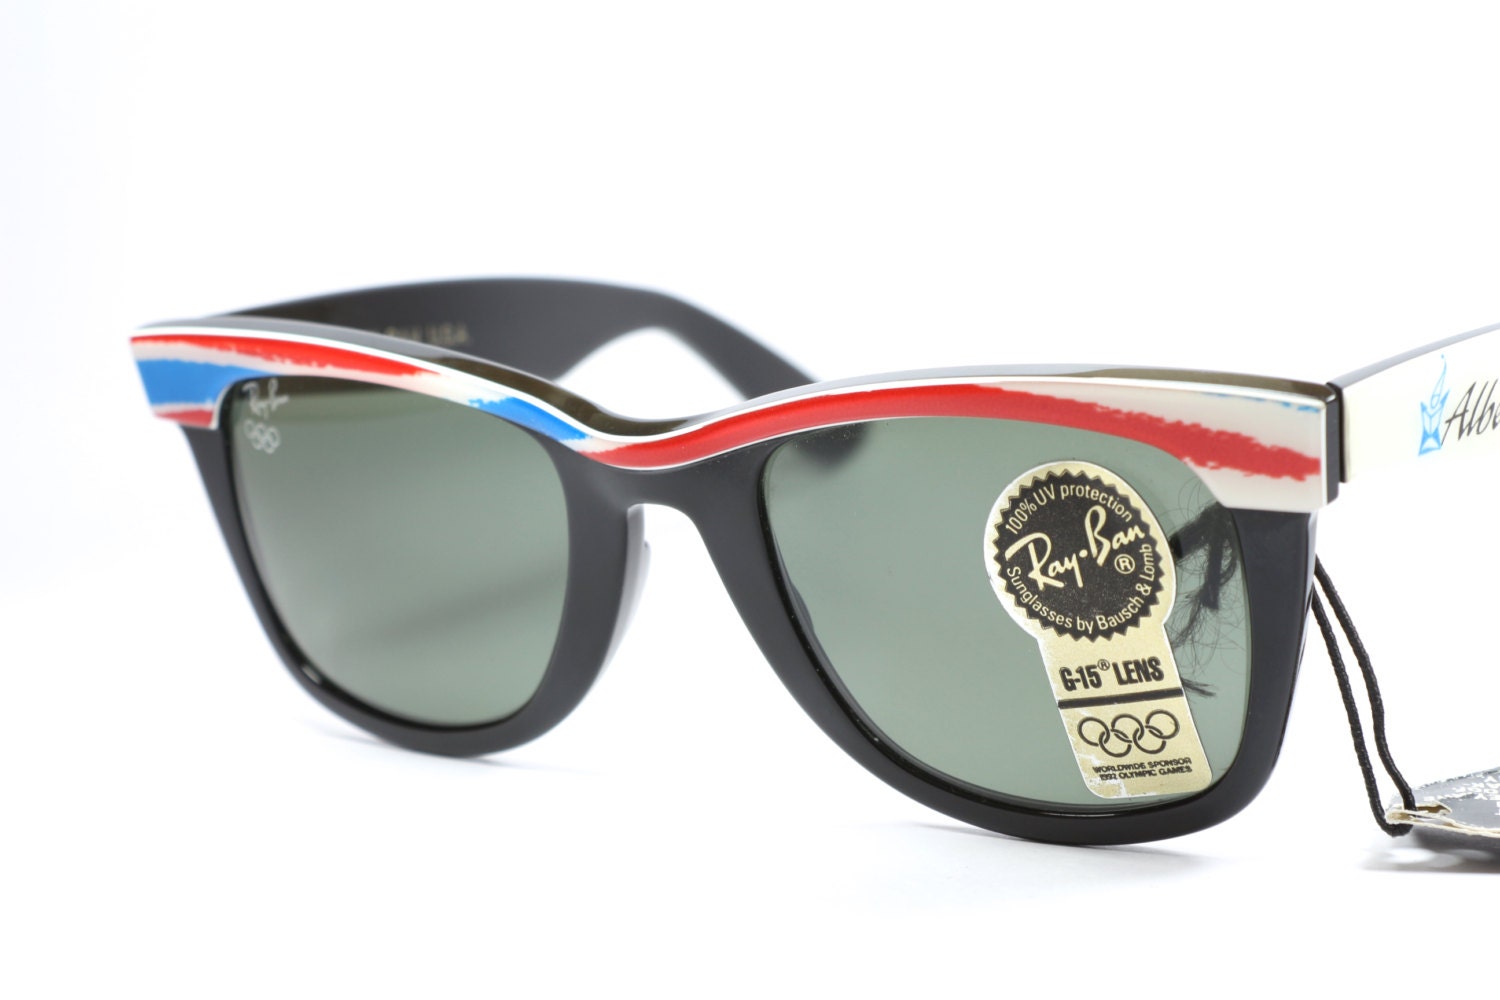 Vintage sunglasses B&L Ray Ban Wayfarer Olympic Albertville